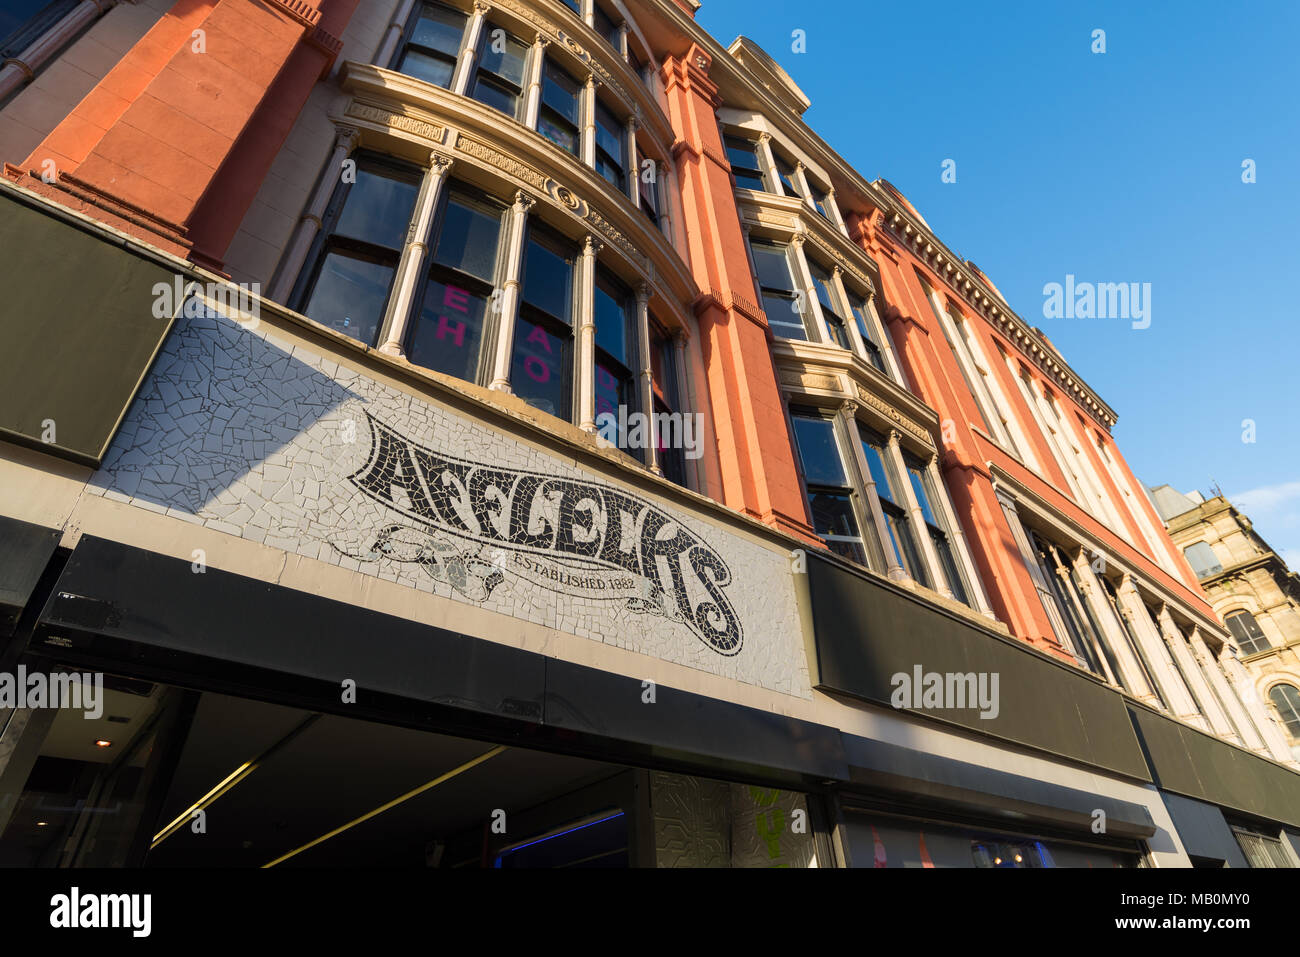 Afflecks, quartier Nord, Oldham Street, Manchester, UK Banque D'Images